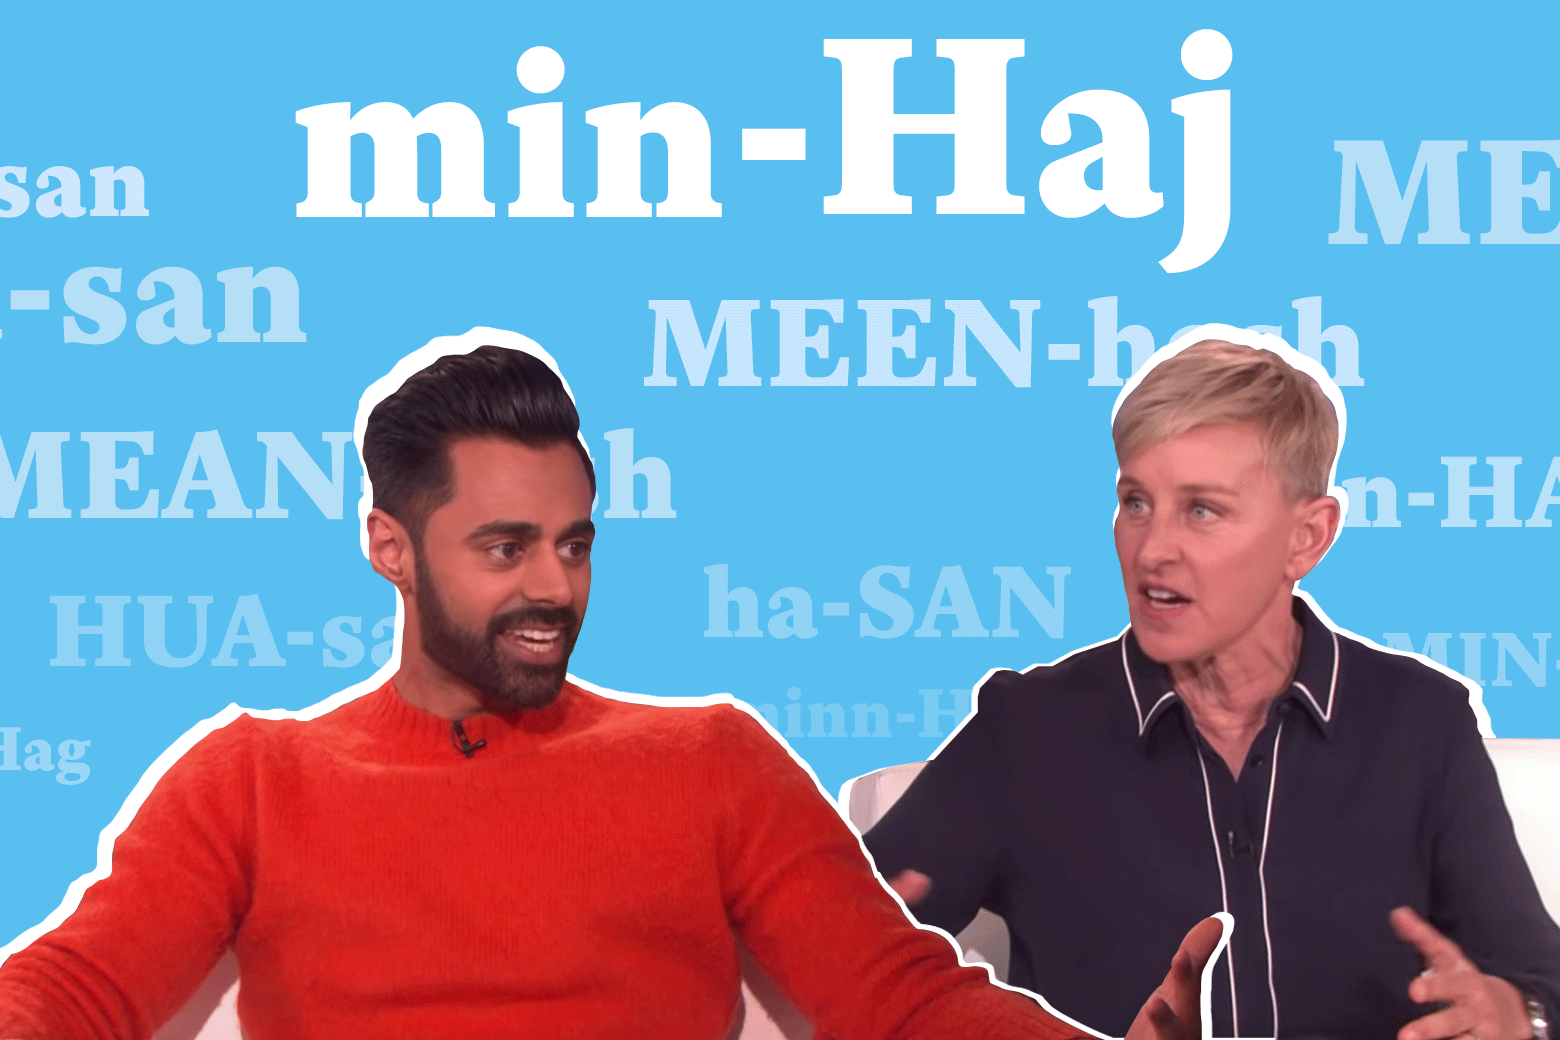 GIF of Hasan Minhaj and Ellen DeGeneres speaking against a background illustrated with various ways to pronounce Hasan Minhaj's name.